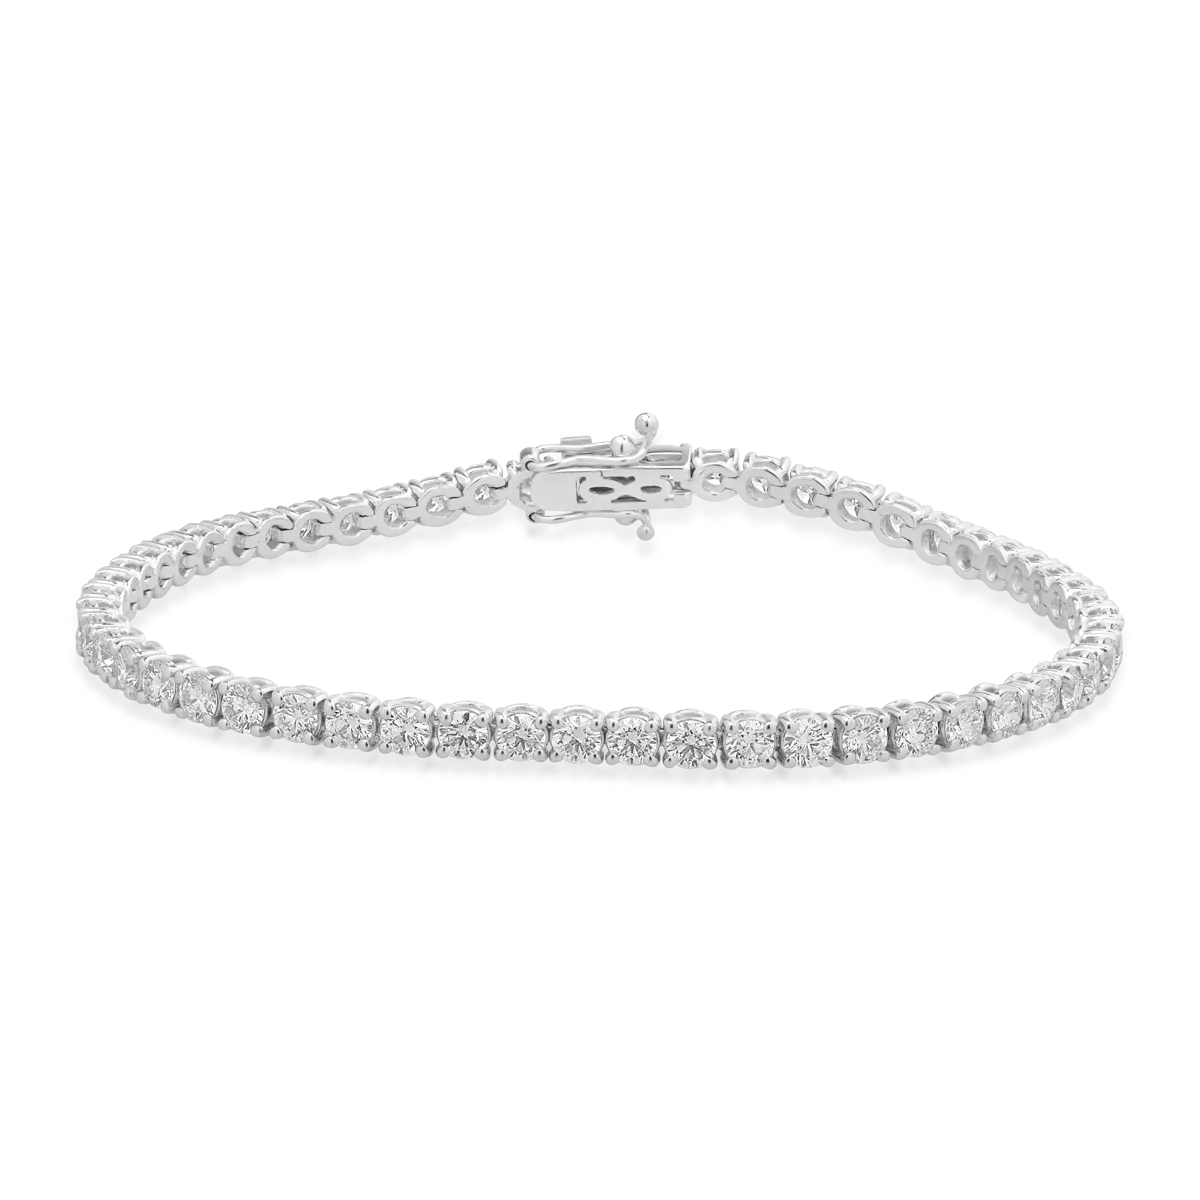 18K white gold tennis bracelet with 6.5ct diamonds